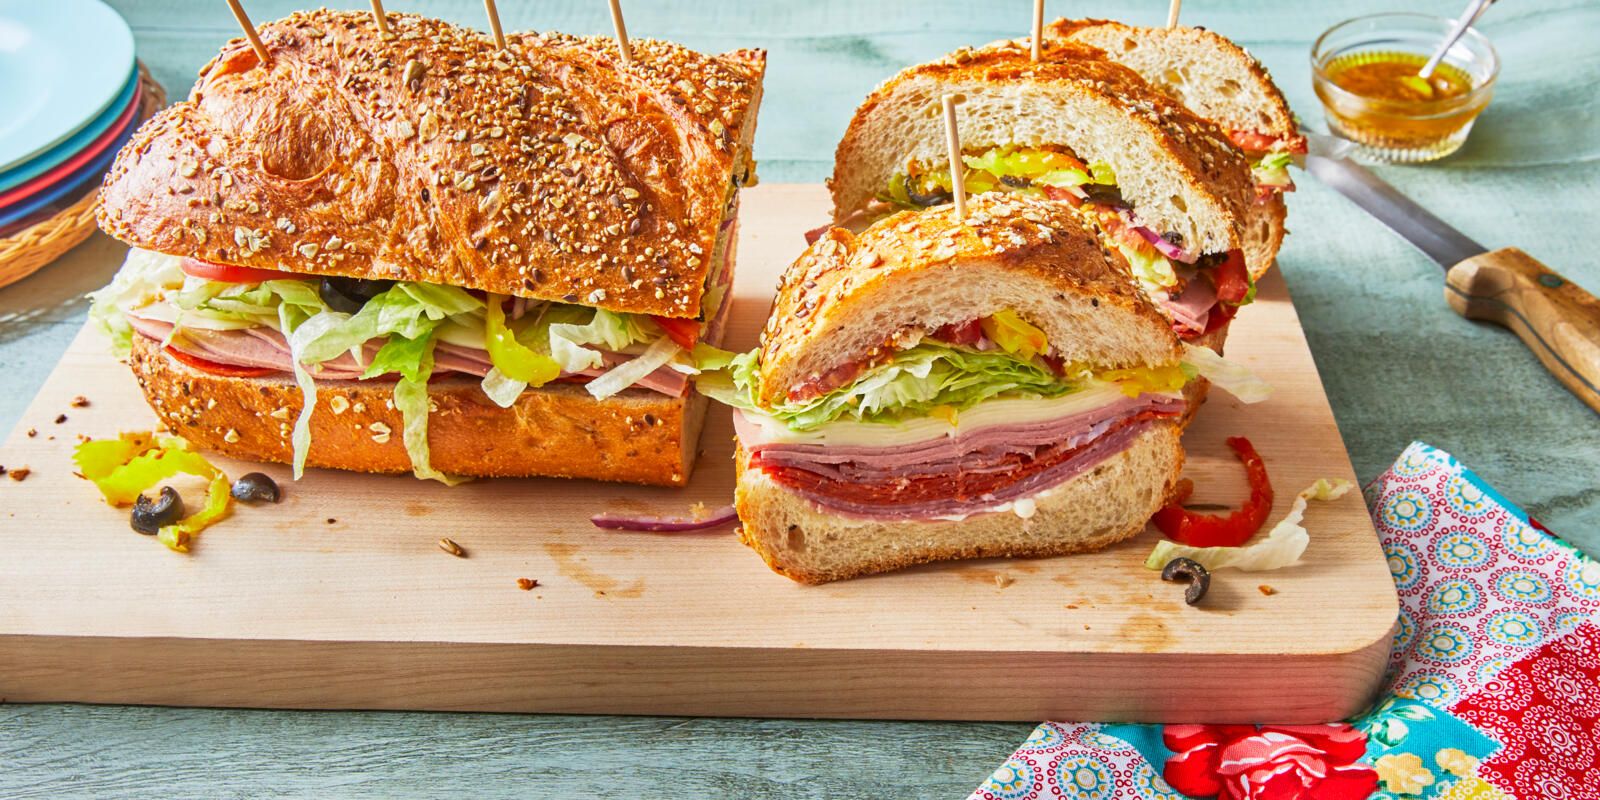 Italian Sub Sandwiches - Simply Scratch